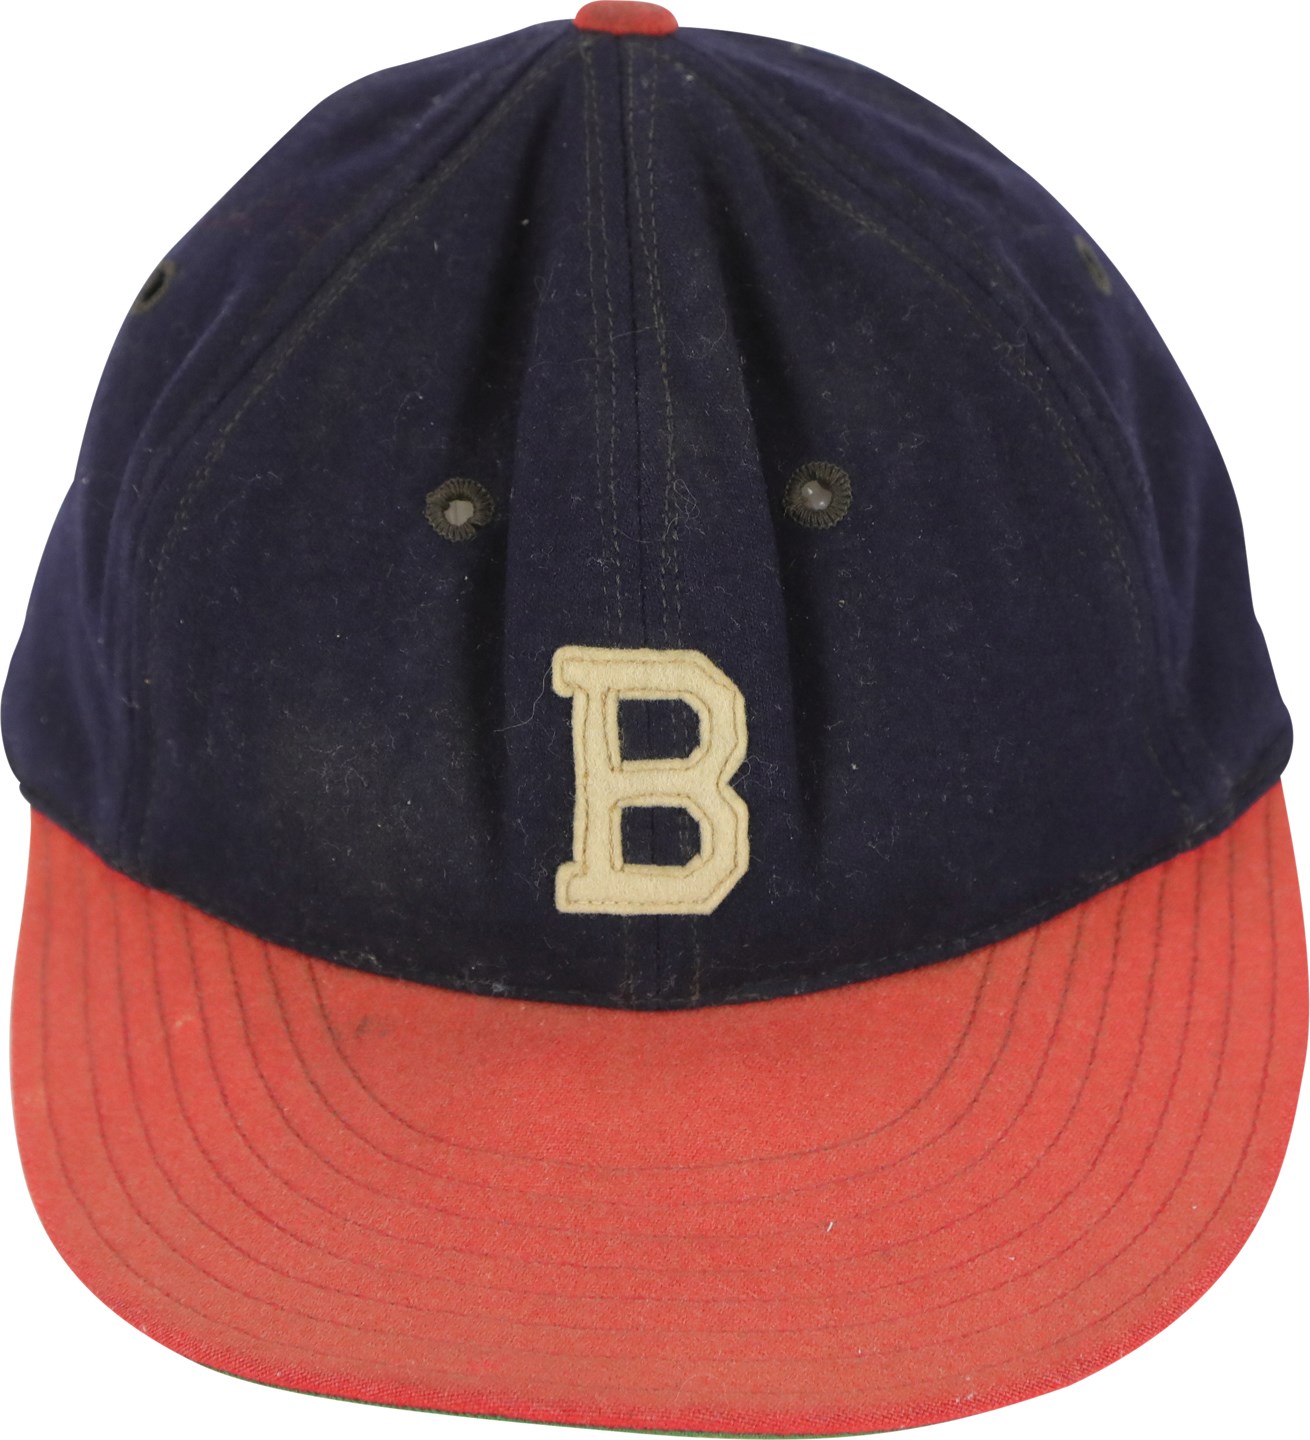 - Circa 1950 Johnny Antonelli Boston Braves Game Used Hat